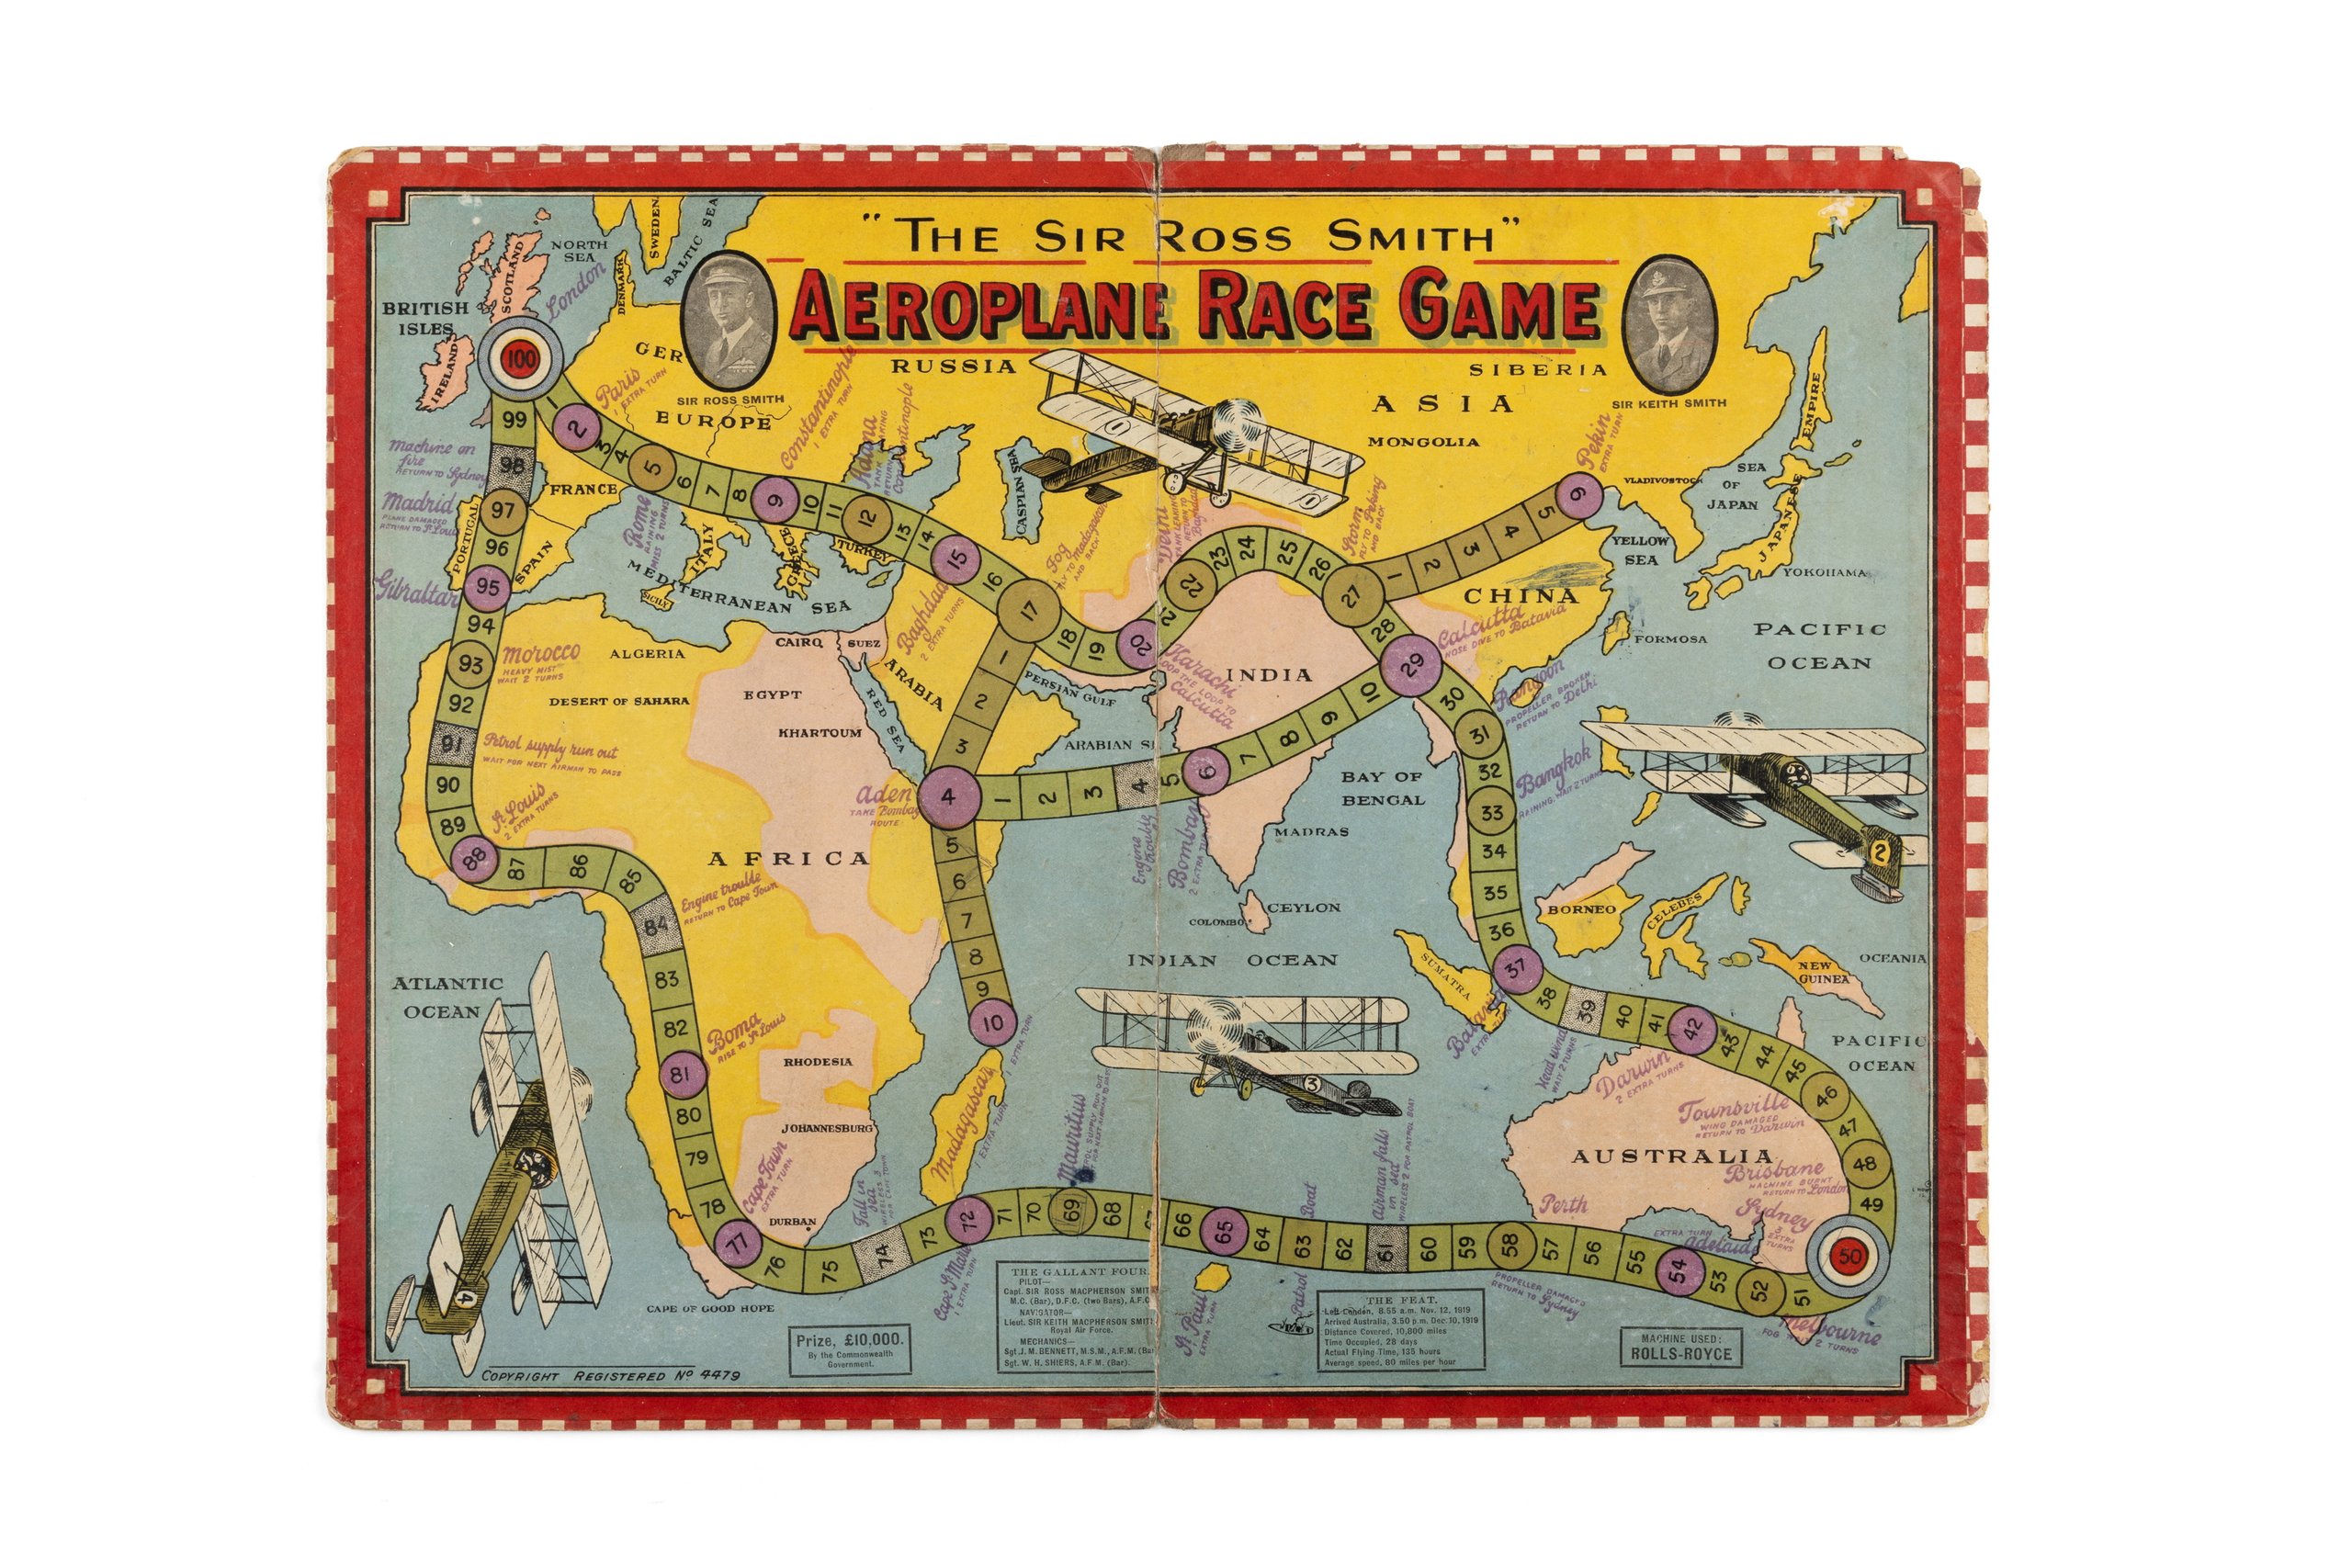 'The Sir Ross Smith Aeroplane Race Game' board game